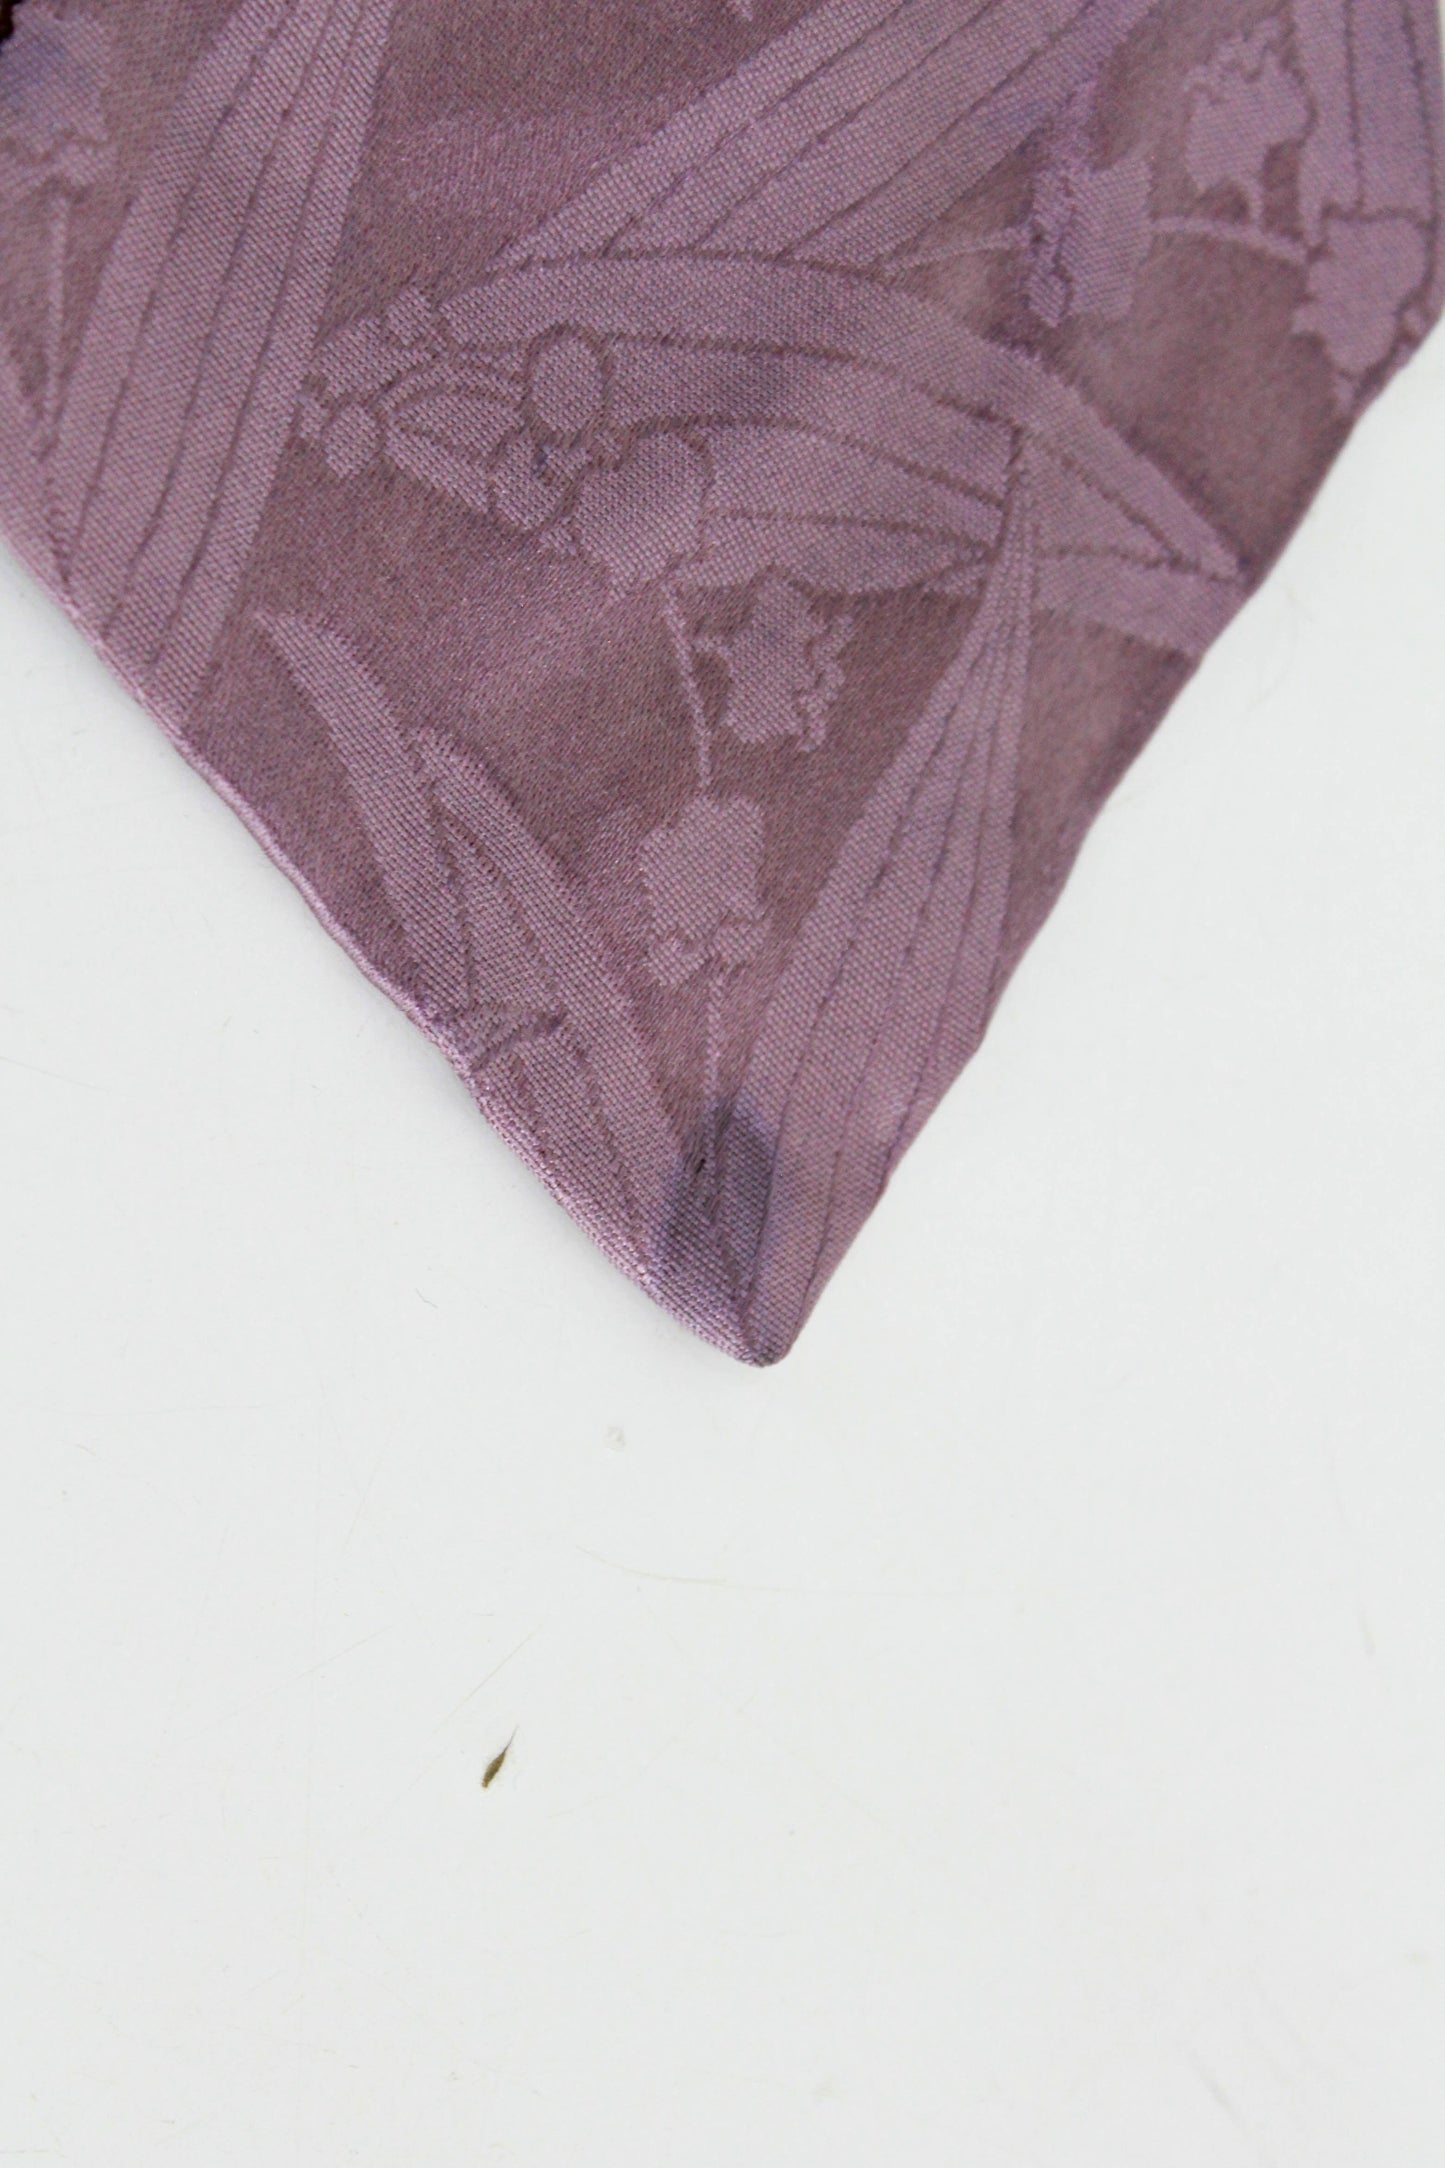 1940s Wide Bold Look Necktie, Hunting/Arrows Print Rayon